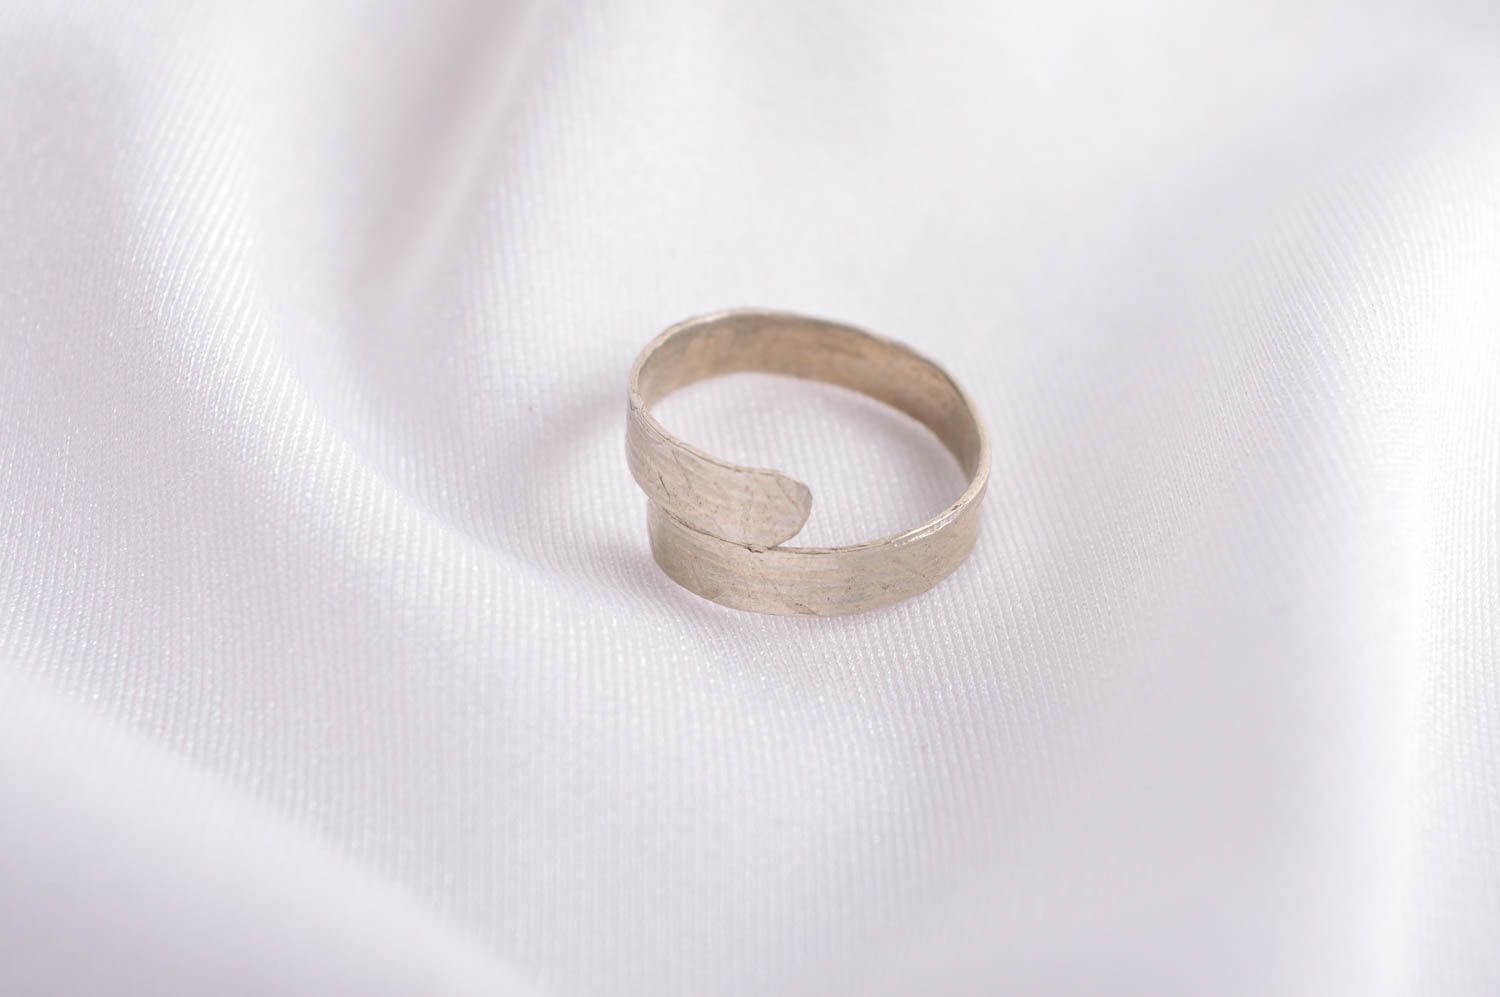 Schöner Ring handgefertigt Damen Modeschmuck tolles Designer Accessoire foto 1